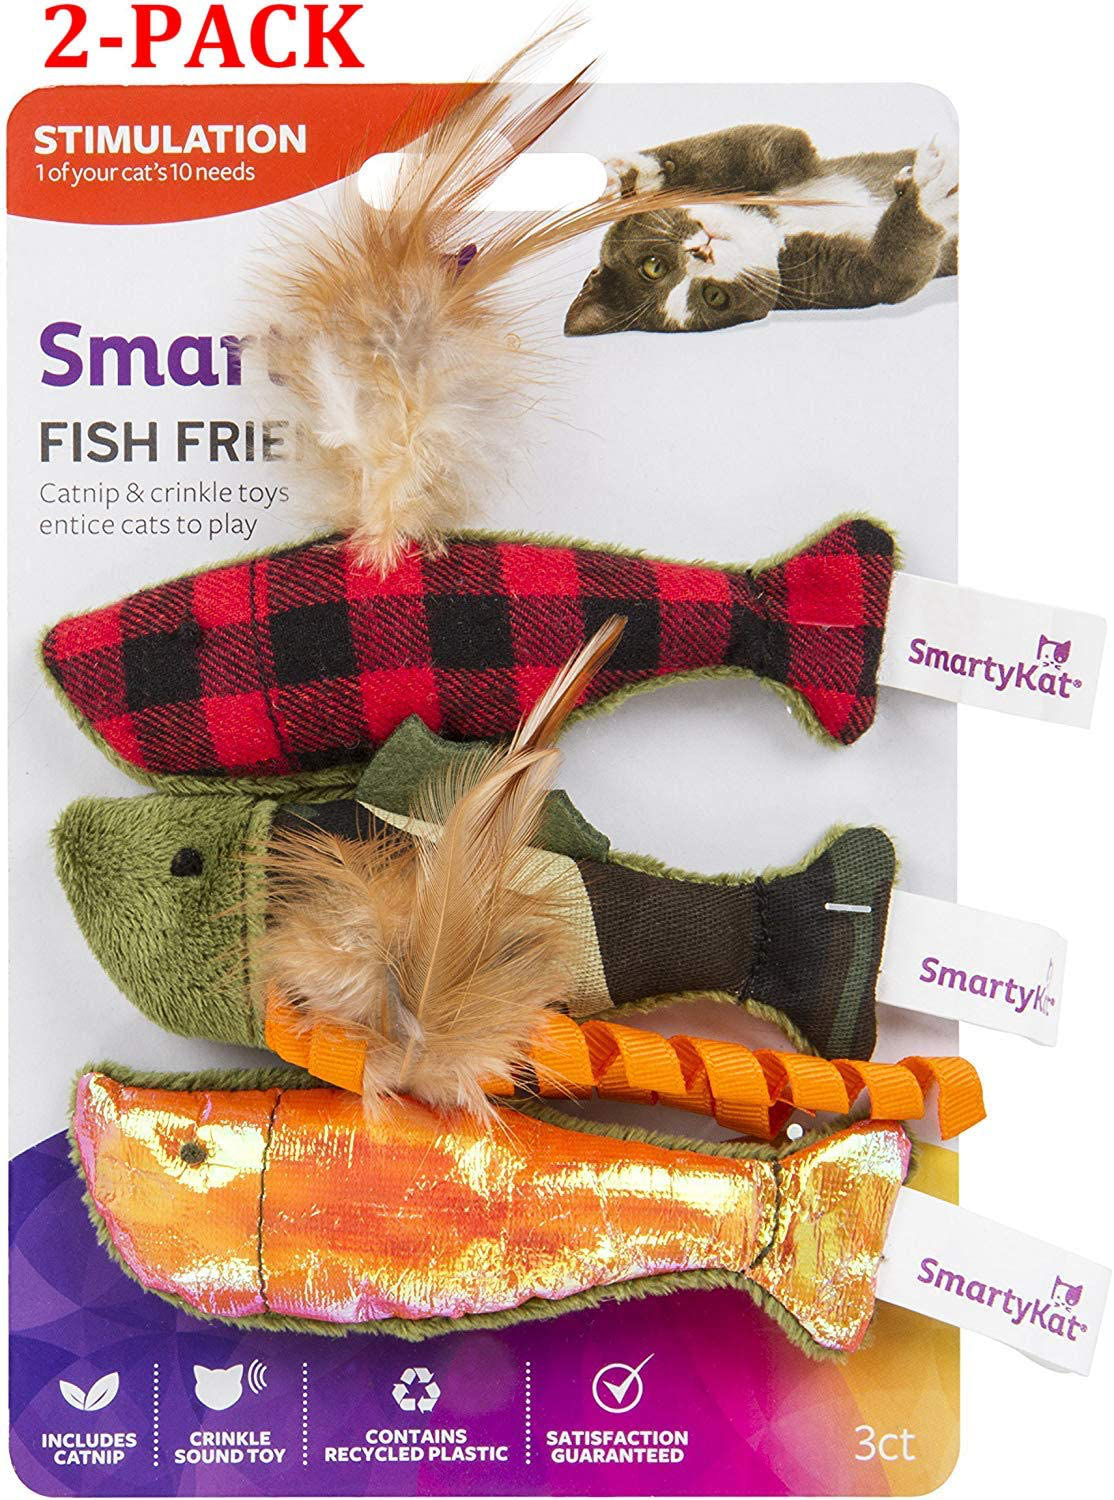 Smartykat Fish Friends Crinkle and Catnip Cat Toys Animals & Pet Supplies > Pet Supplies > Cat Supplies > Cat Toys SmartyKat Multi, 2-Pack  